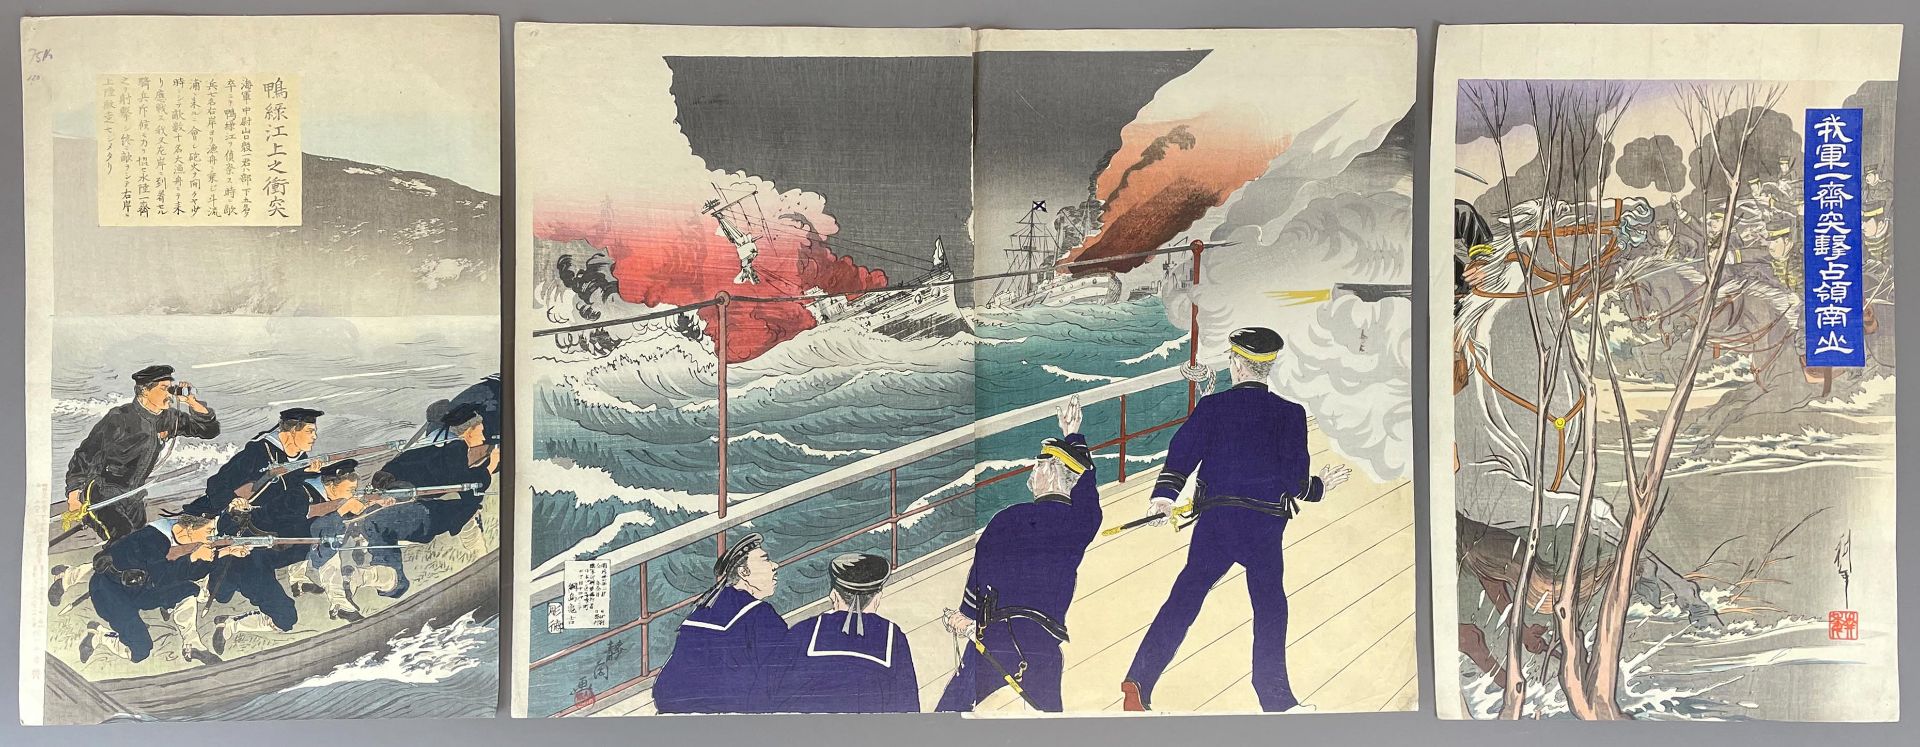 Konvolut Holzschnitte. Japan. 19. / 20. Jahrhundert. Seeschlachten Russisch - Japanischen Krieges,